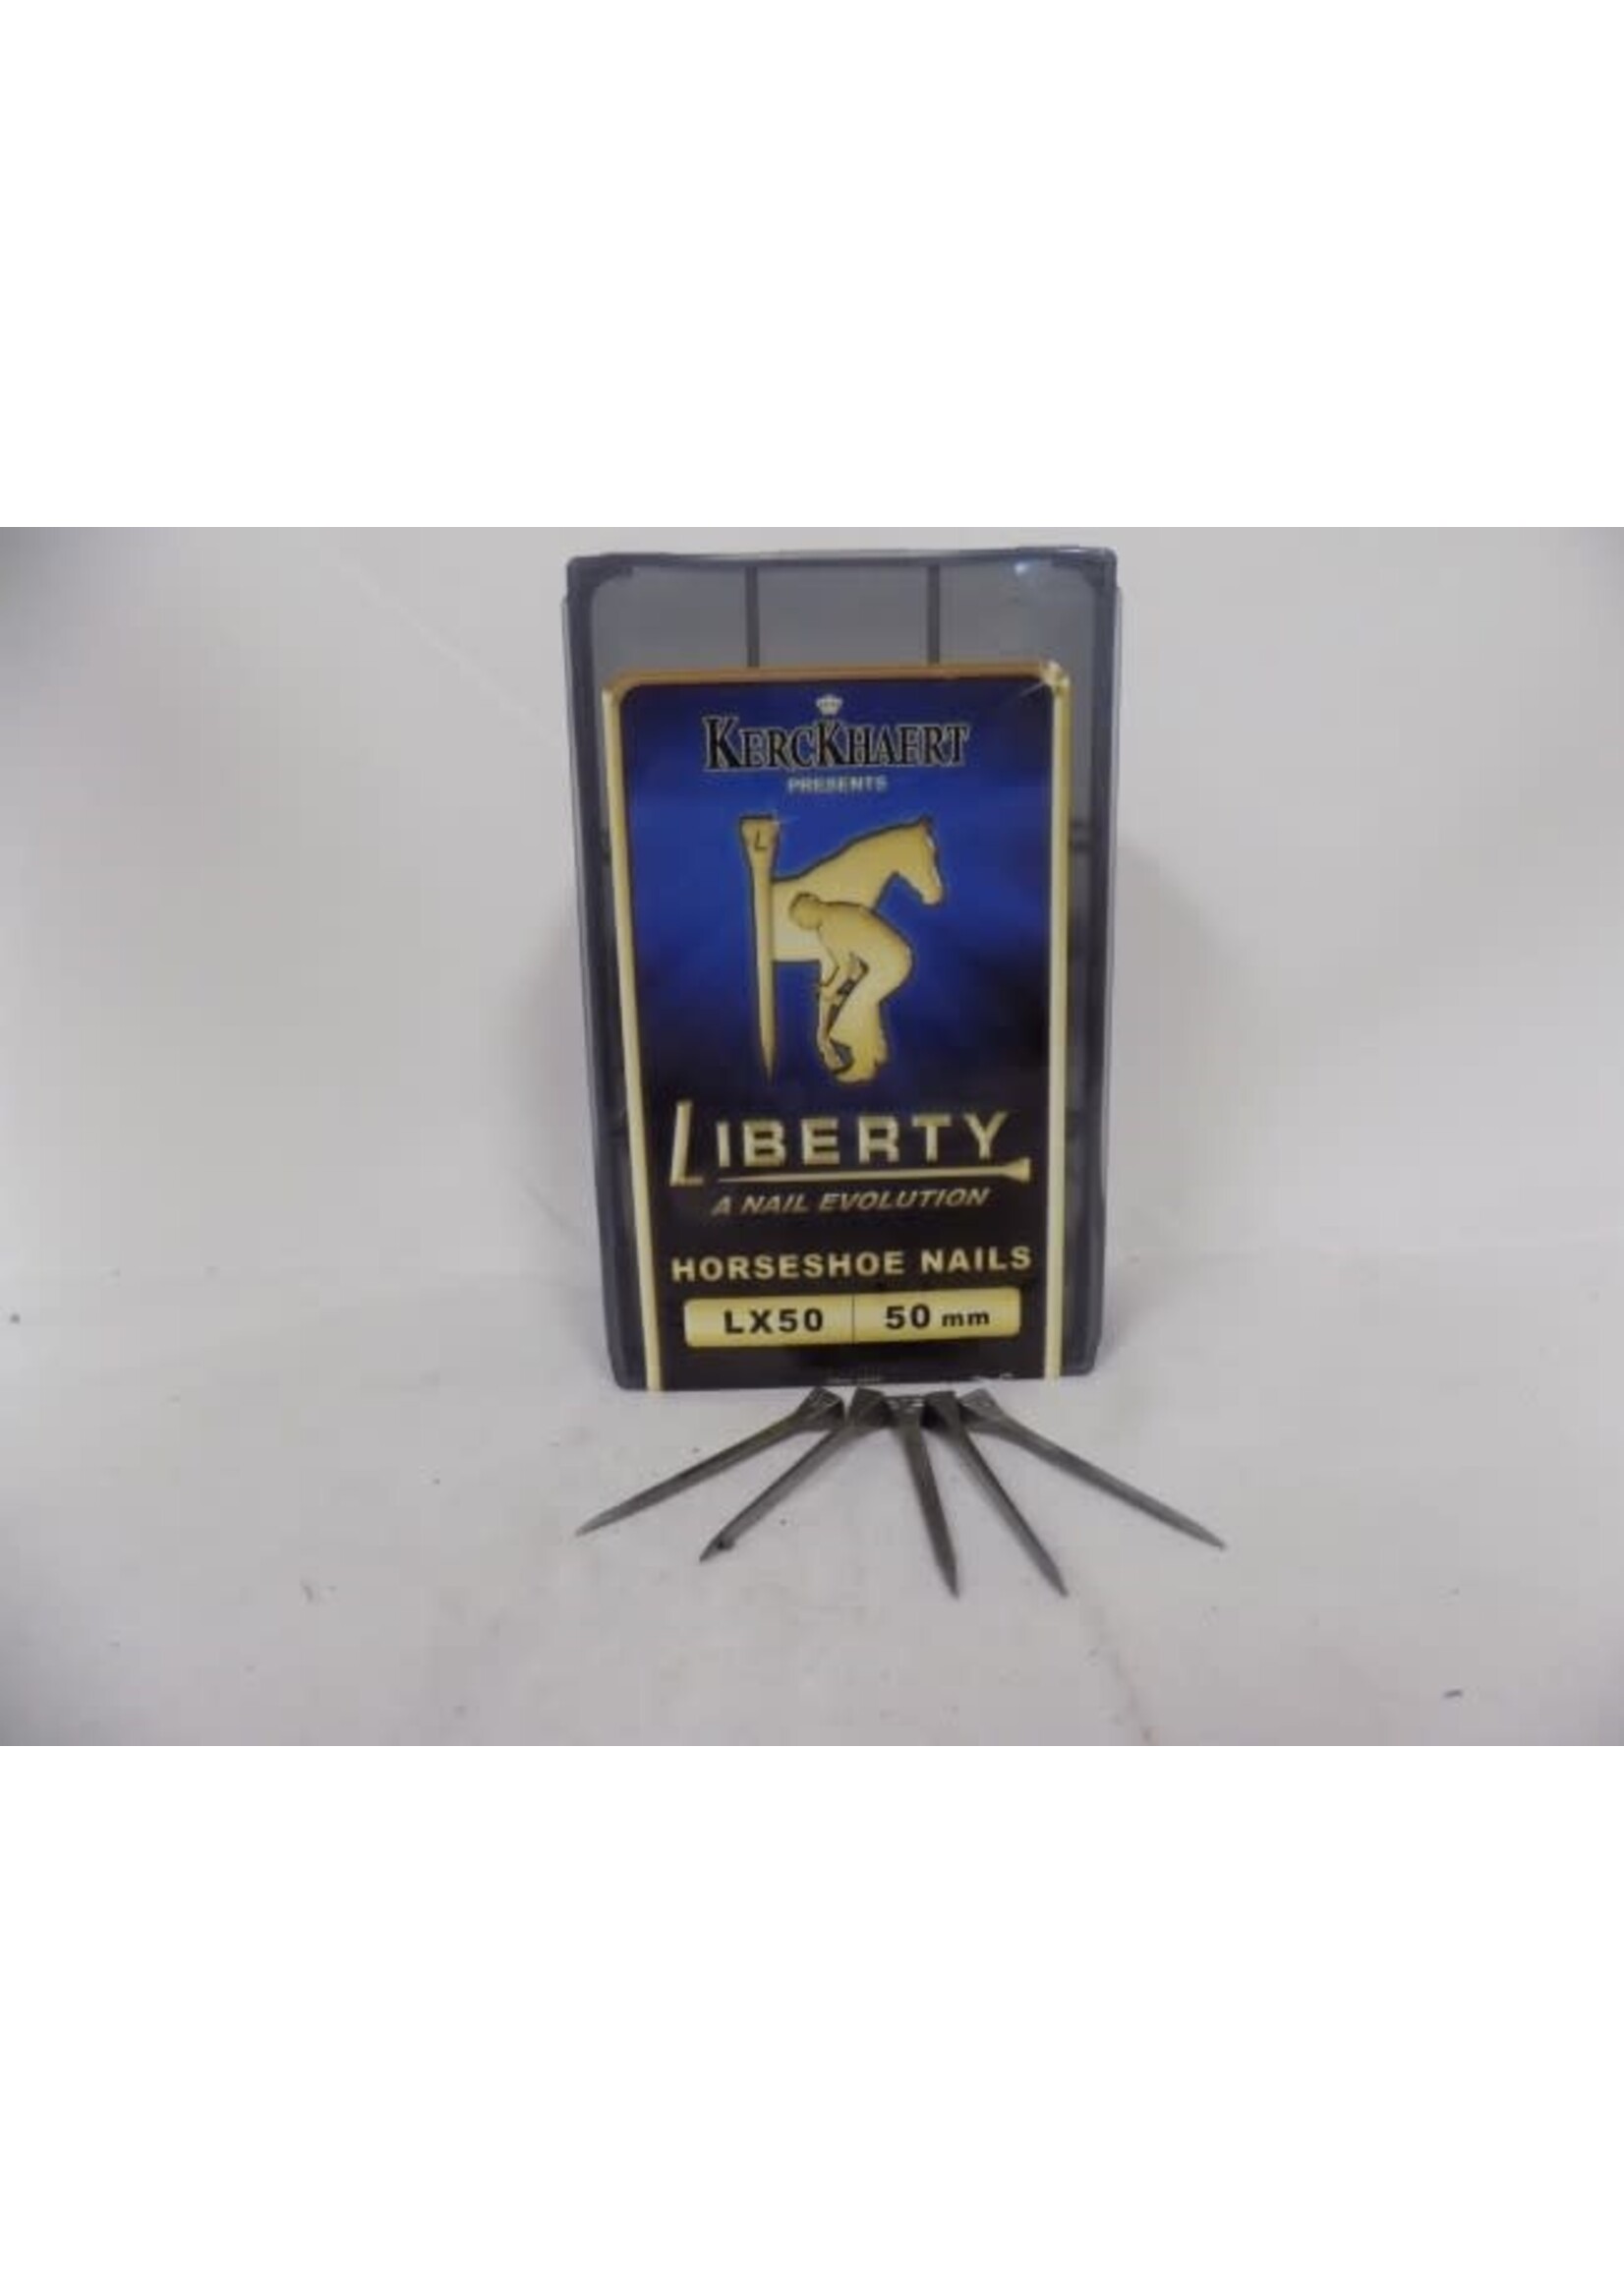 Liberty Liberty LX Nails